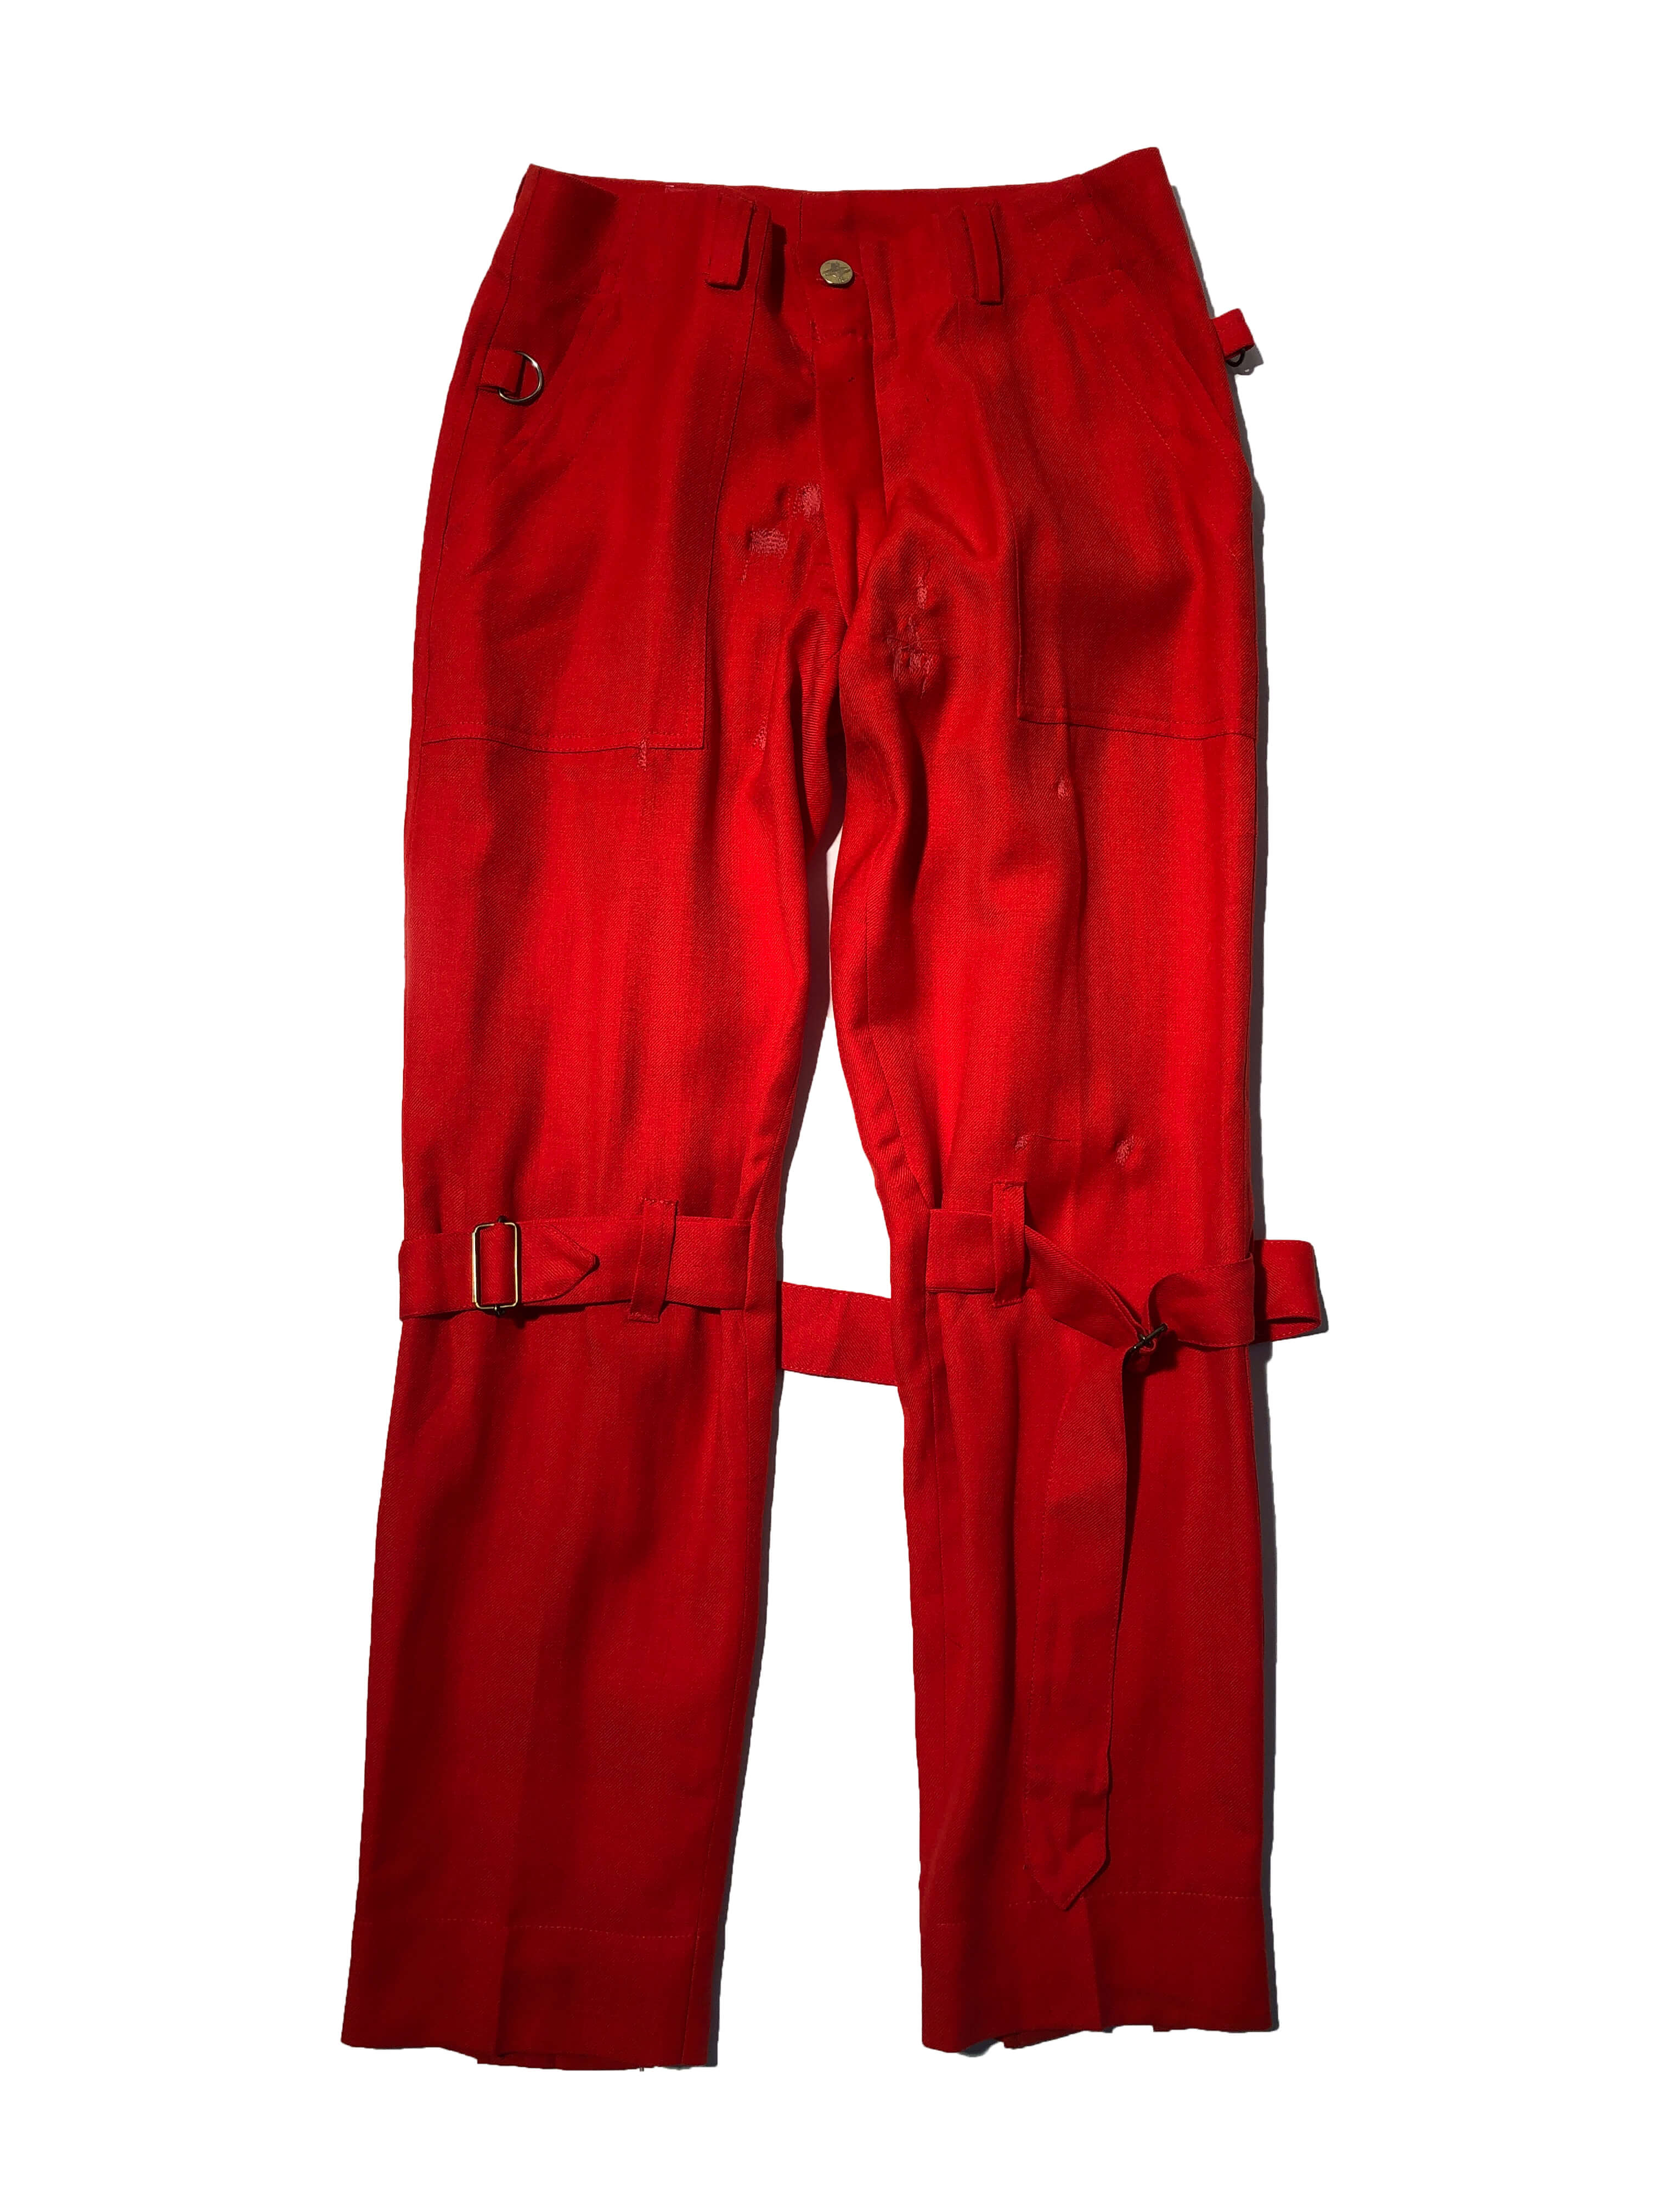 VIVIENNE WESTWOOD early 90s red bondage pants